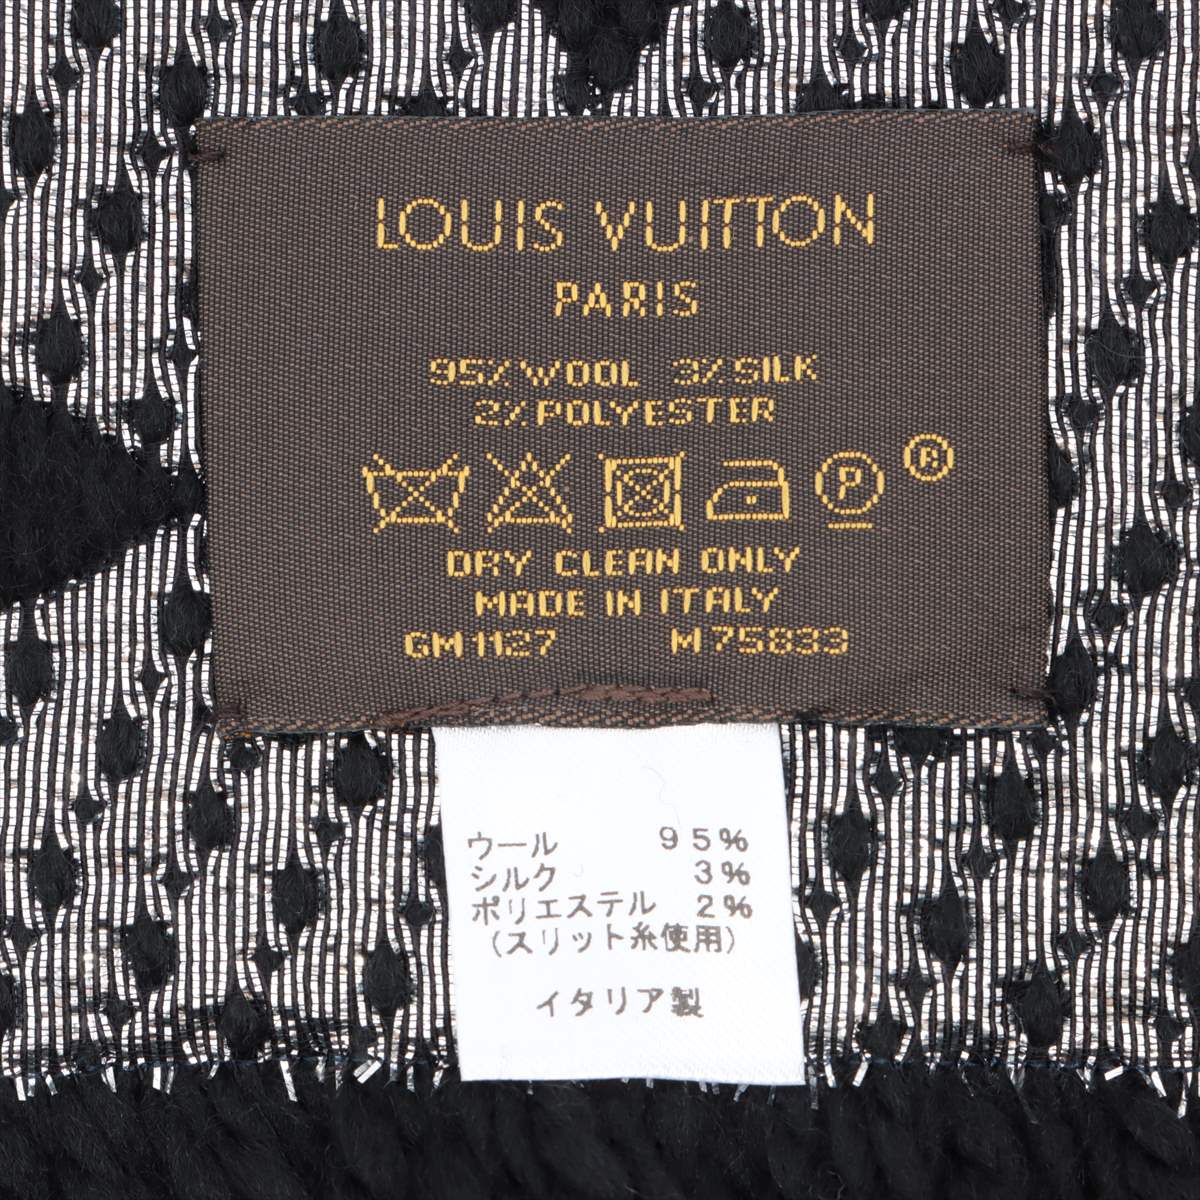 Louis Vuitton Black Wool & Silk Logomania Shine Scarf Louis Vuitton